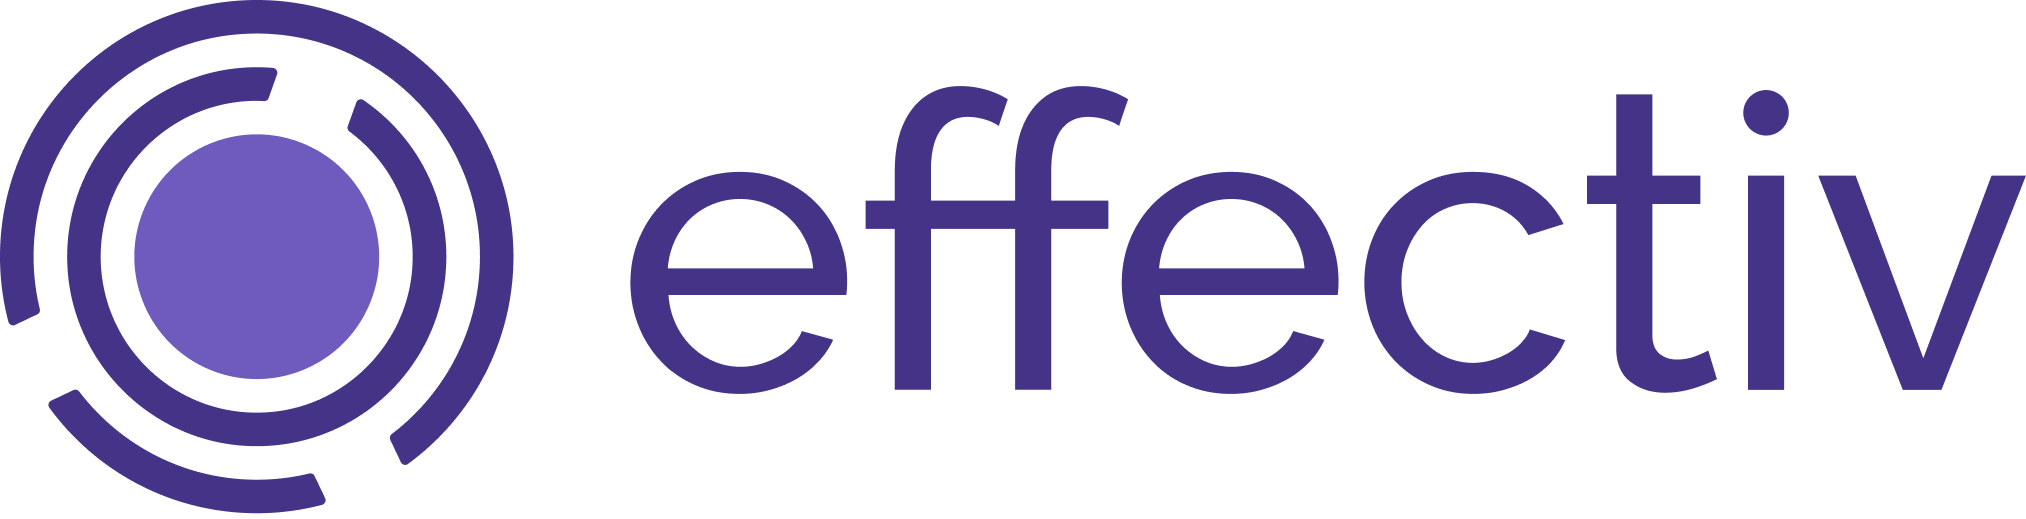 effiectiv logo